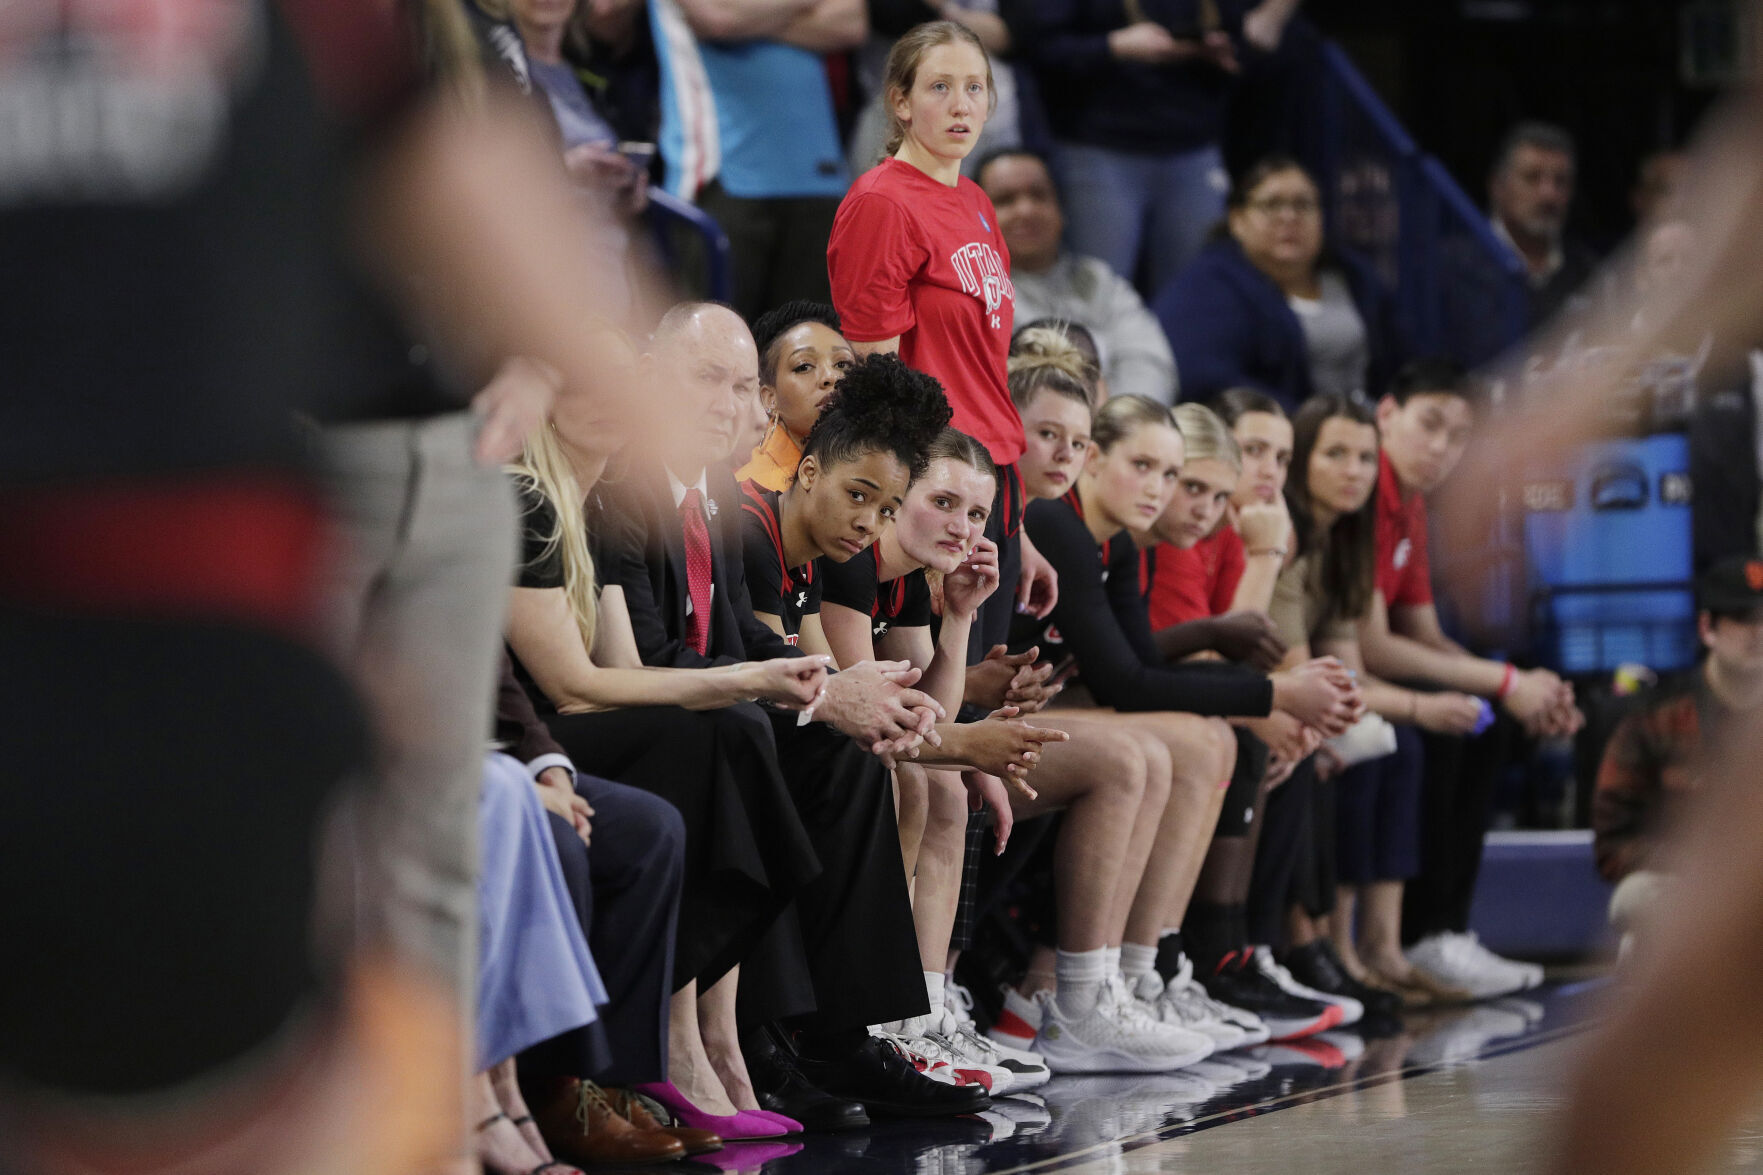 Utah Women’s Basketball Team Shaken by Racist Hate During NCAA Tournament